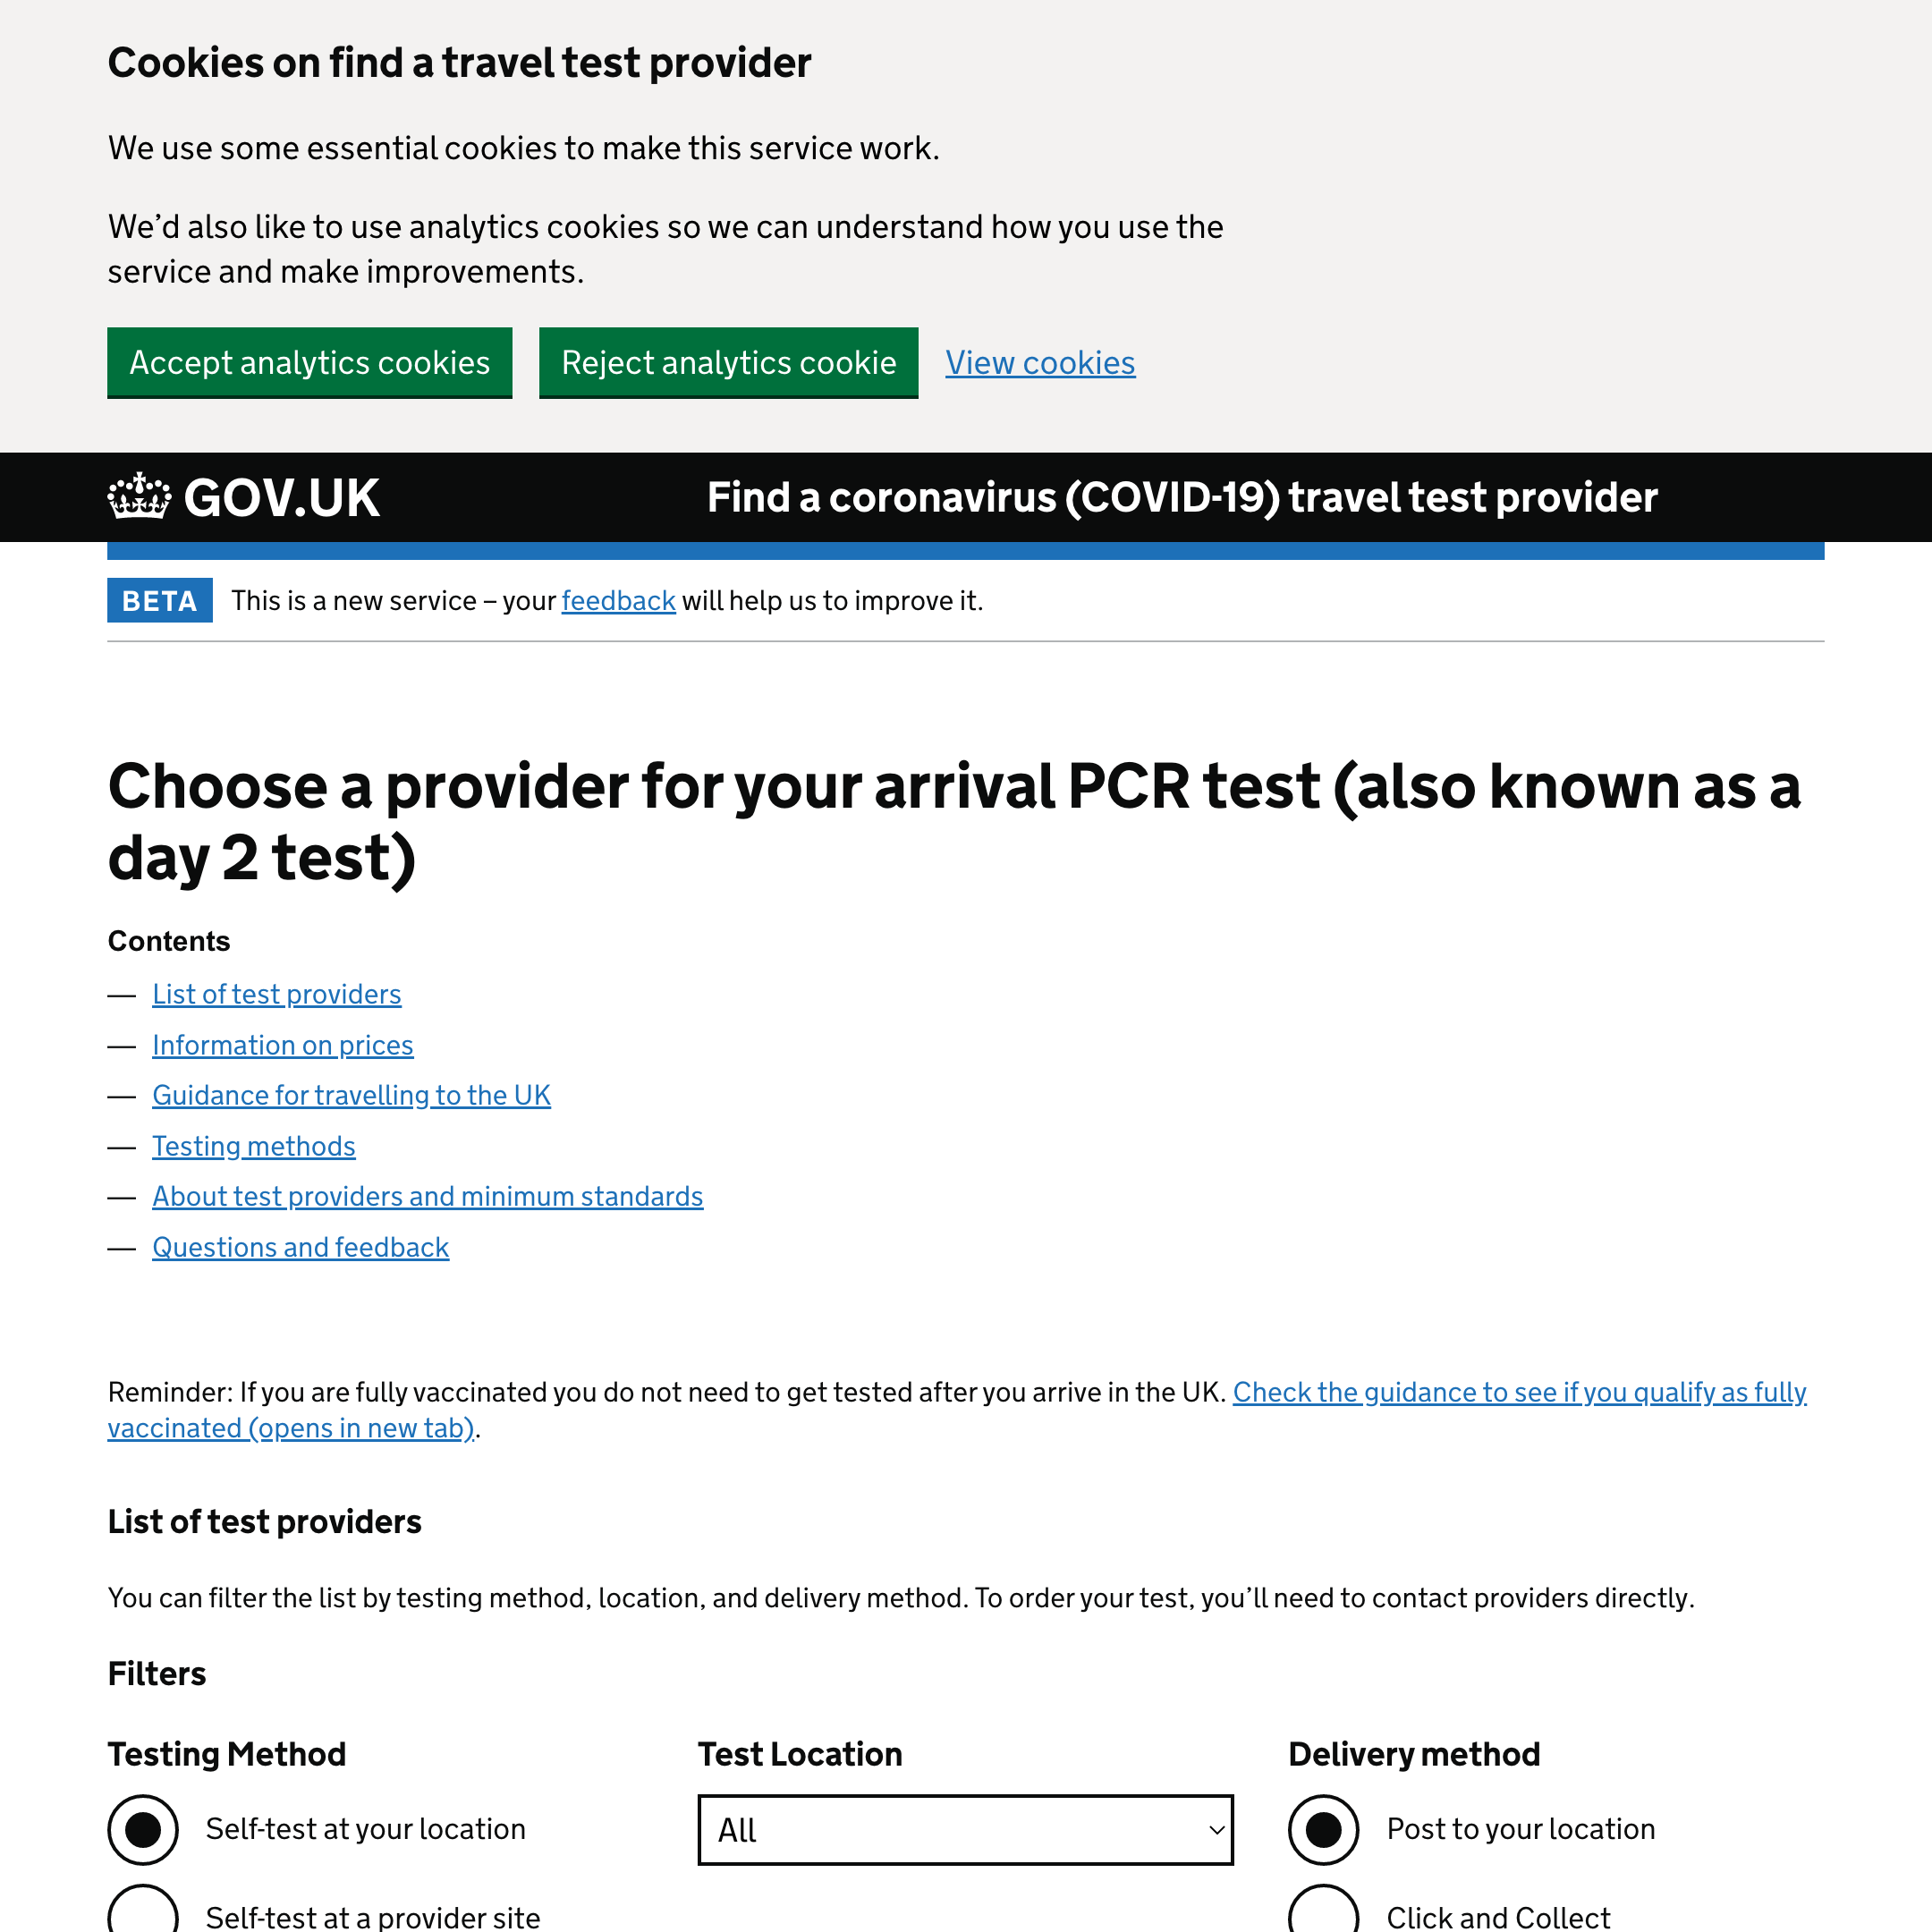 Find a coronavirus (COVID-19) travel test provider